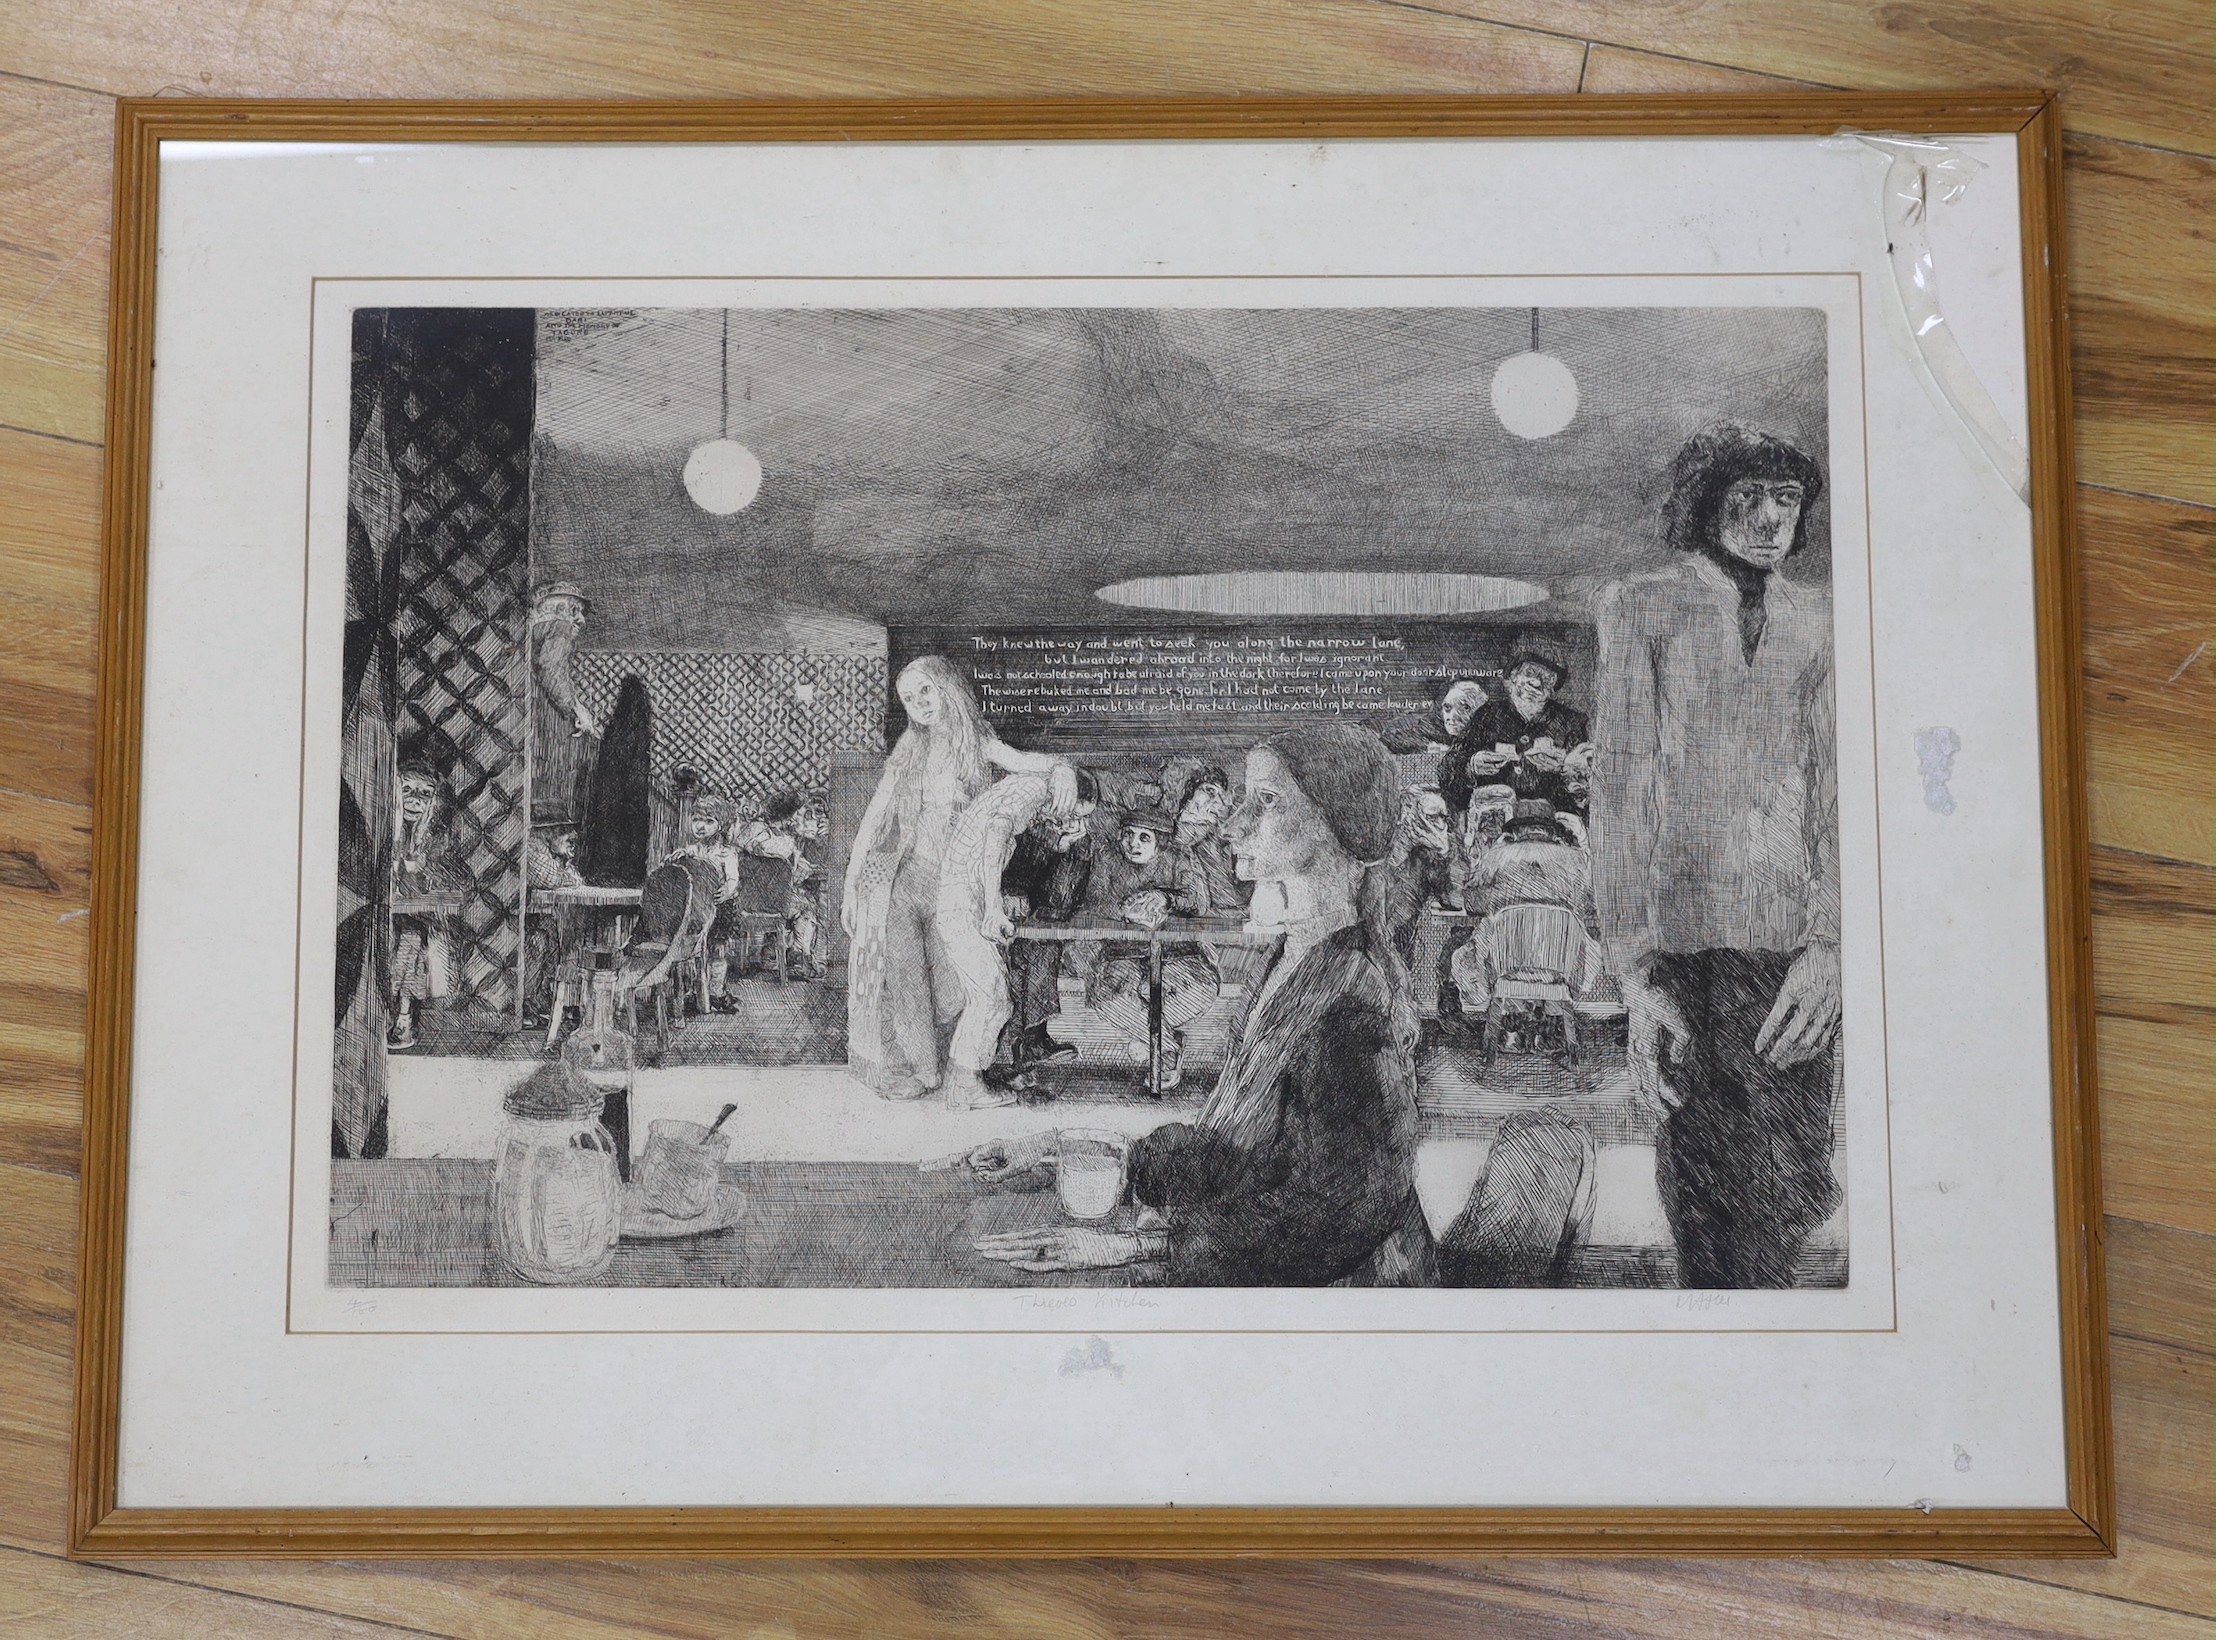 Modern British, etching, 'Thieves Kitchen', indistinctly signed, 4/100, 46 x 68cm - Image 2 of 2